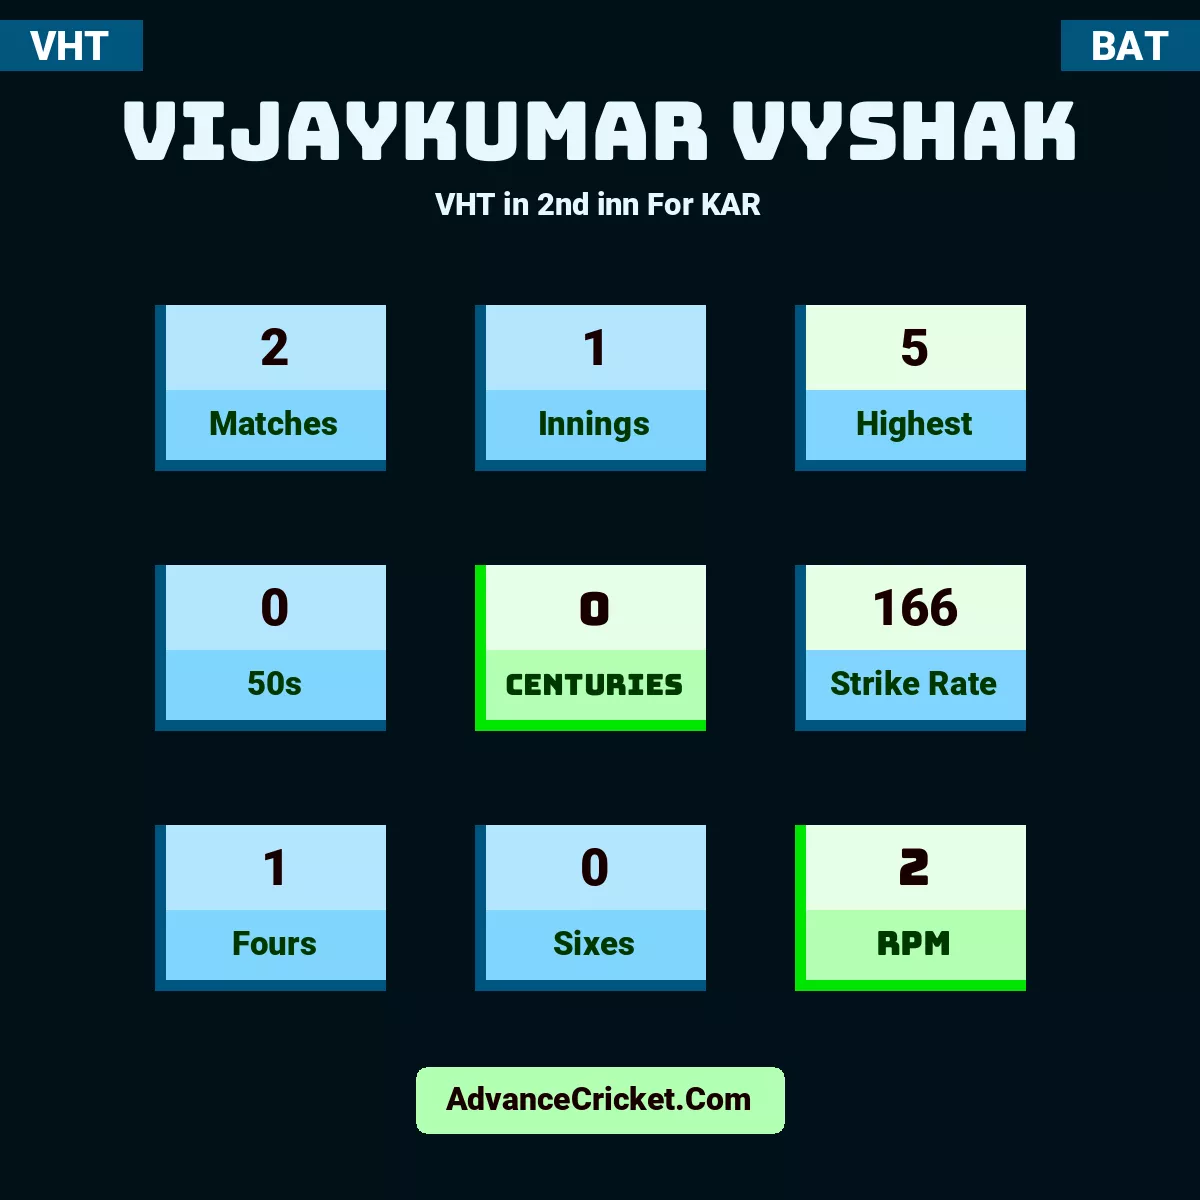 Vijaykumar Vyshak VHT  in 2nd inn For KAR, Vijaykumar Vyshak played 2 matches, scored 5 runs as highest, 0 half-centuries, and 0 centuries, with a strike rate of 166. V.Vyshak hit 1 fours and 0 sixes, with an RPM of 2.